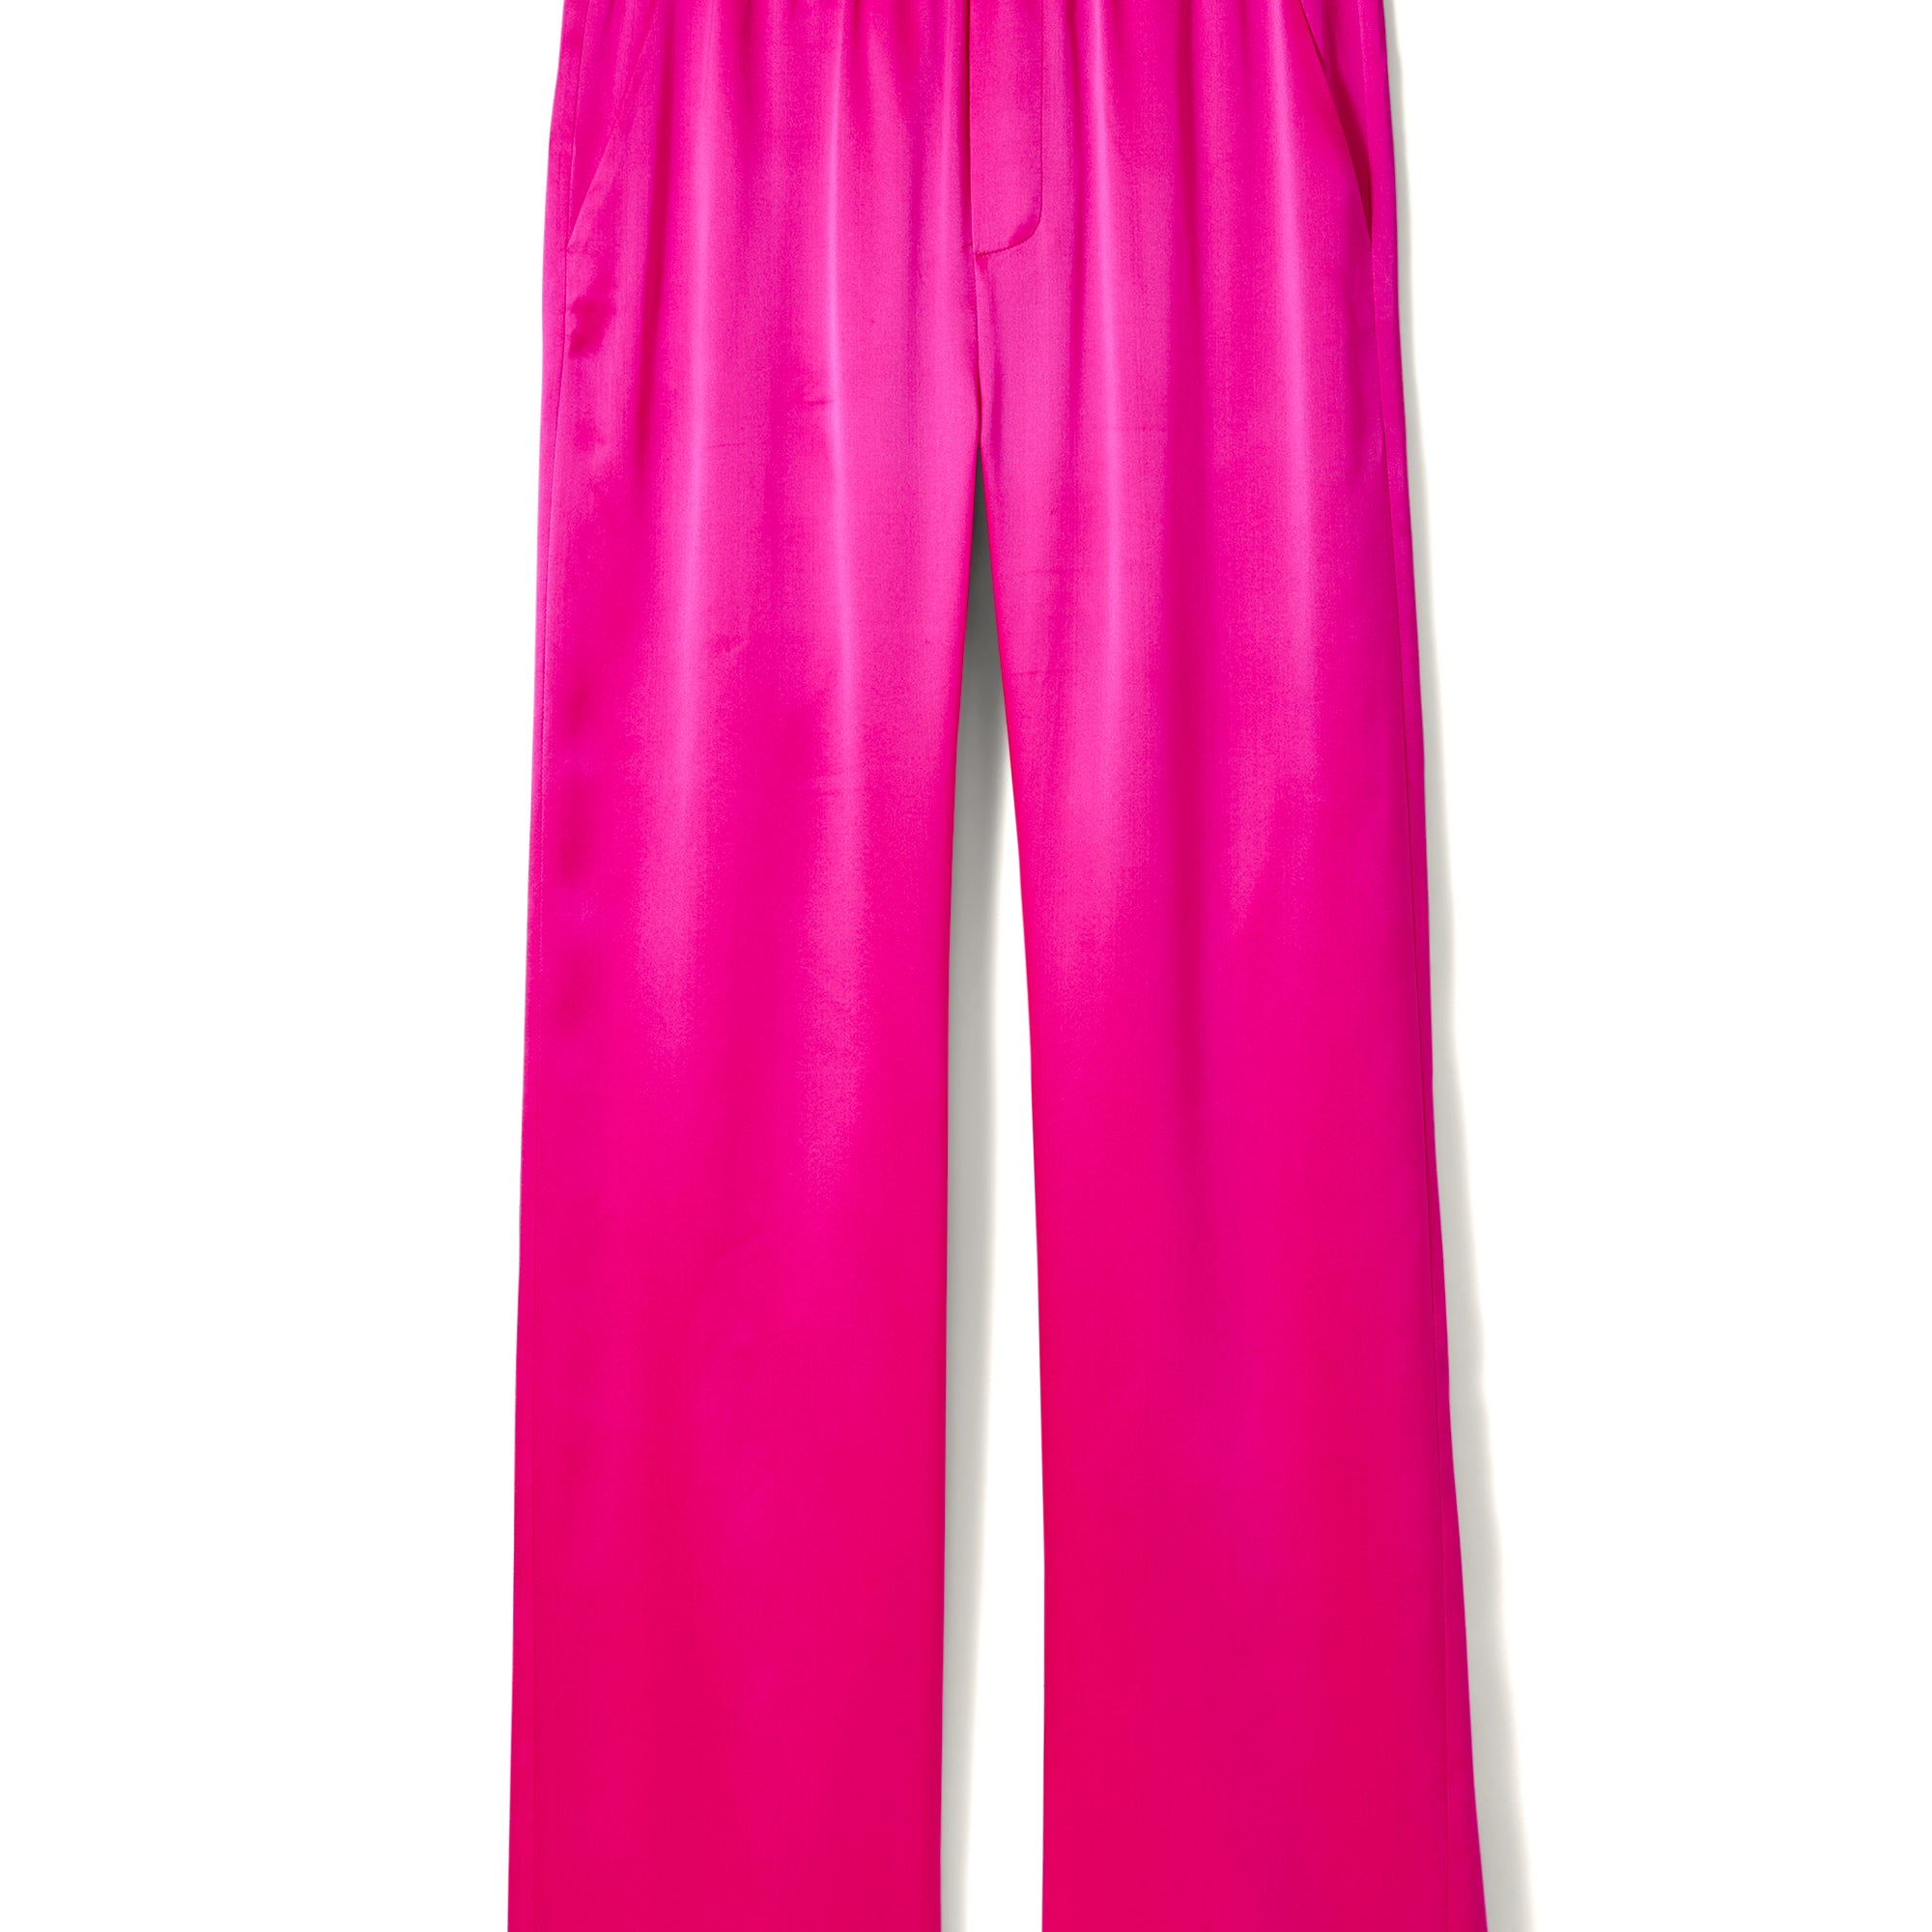 The Iris Hot Pink 100% Silk Charmeuse Wide Leg Pant